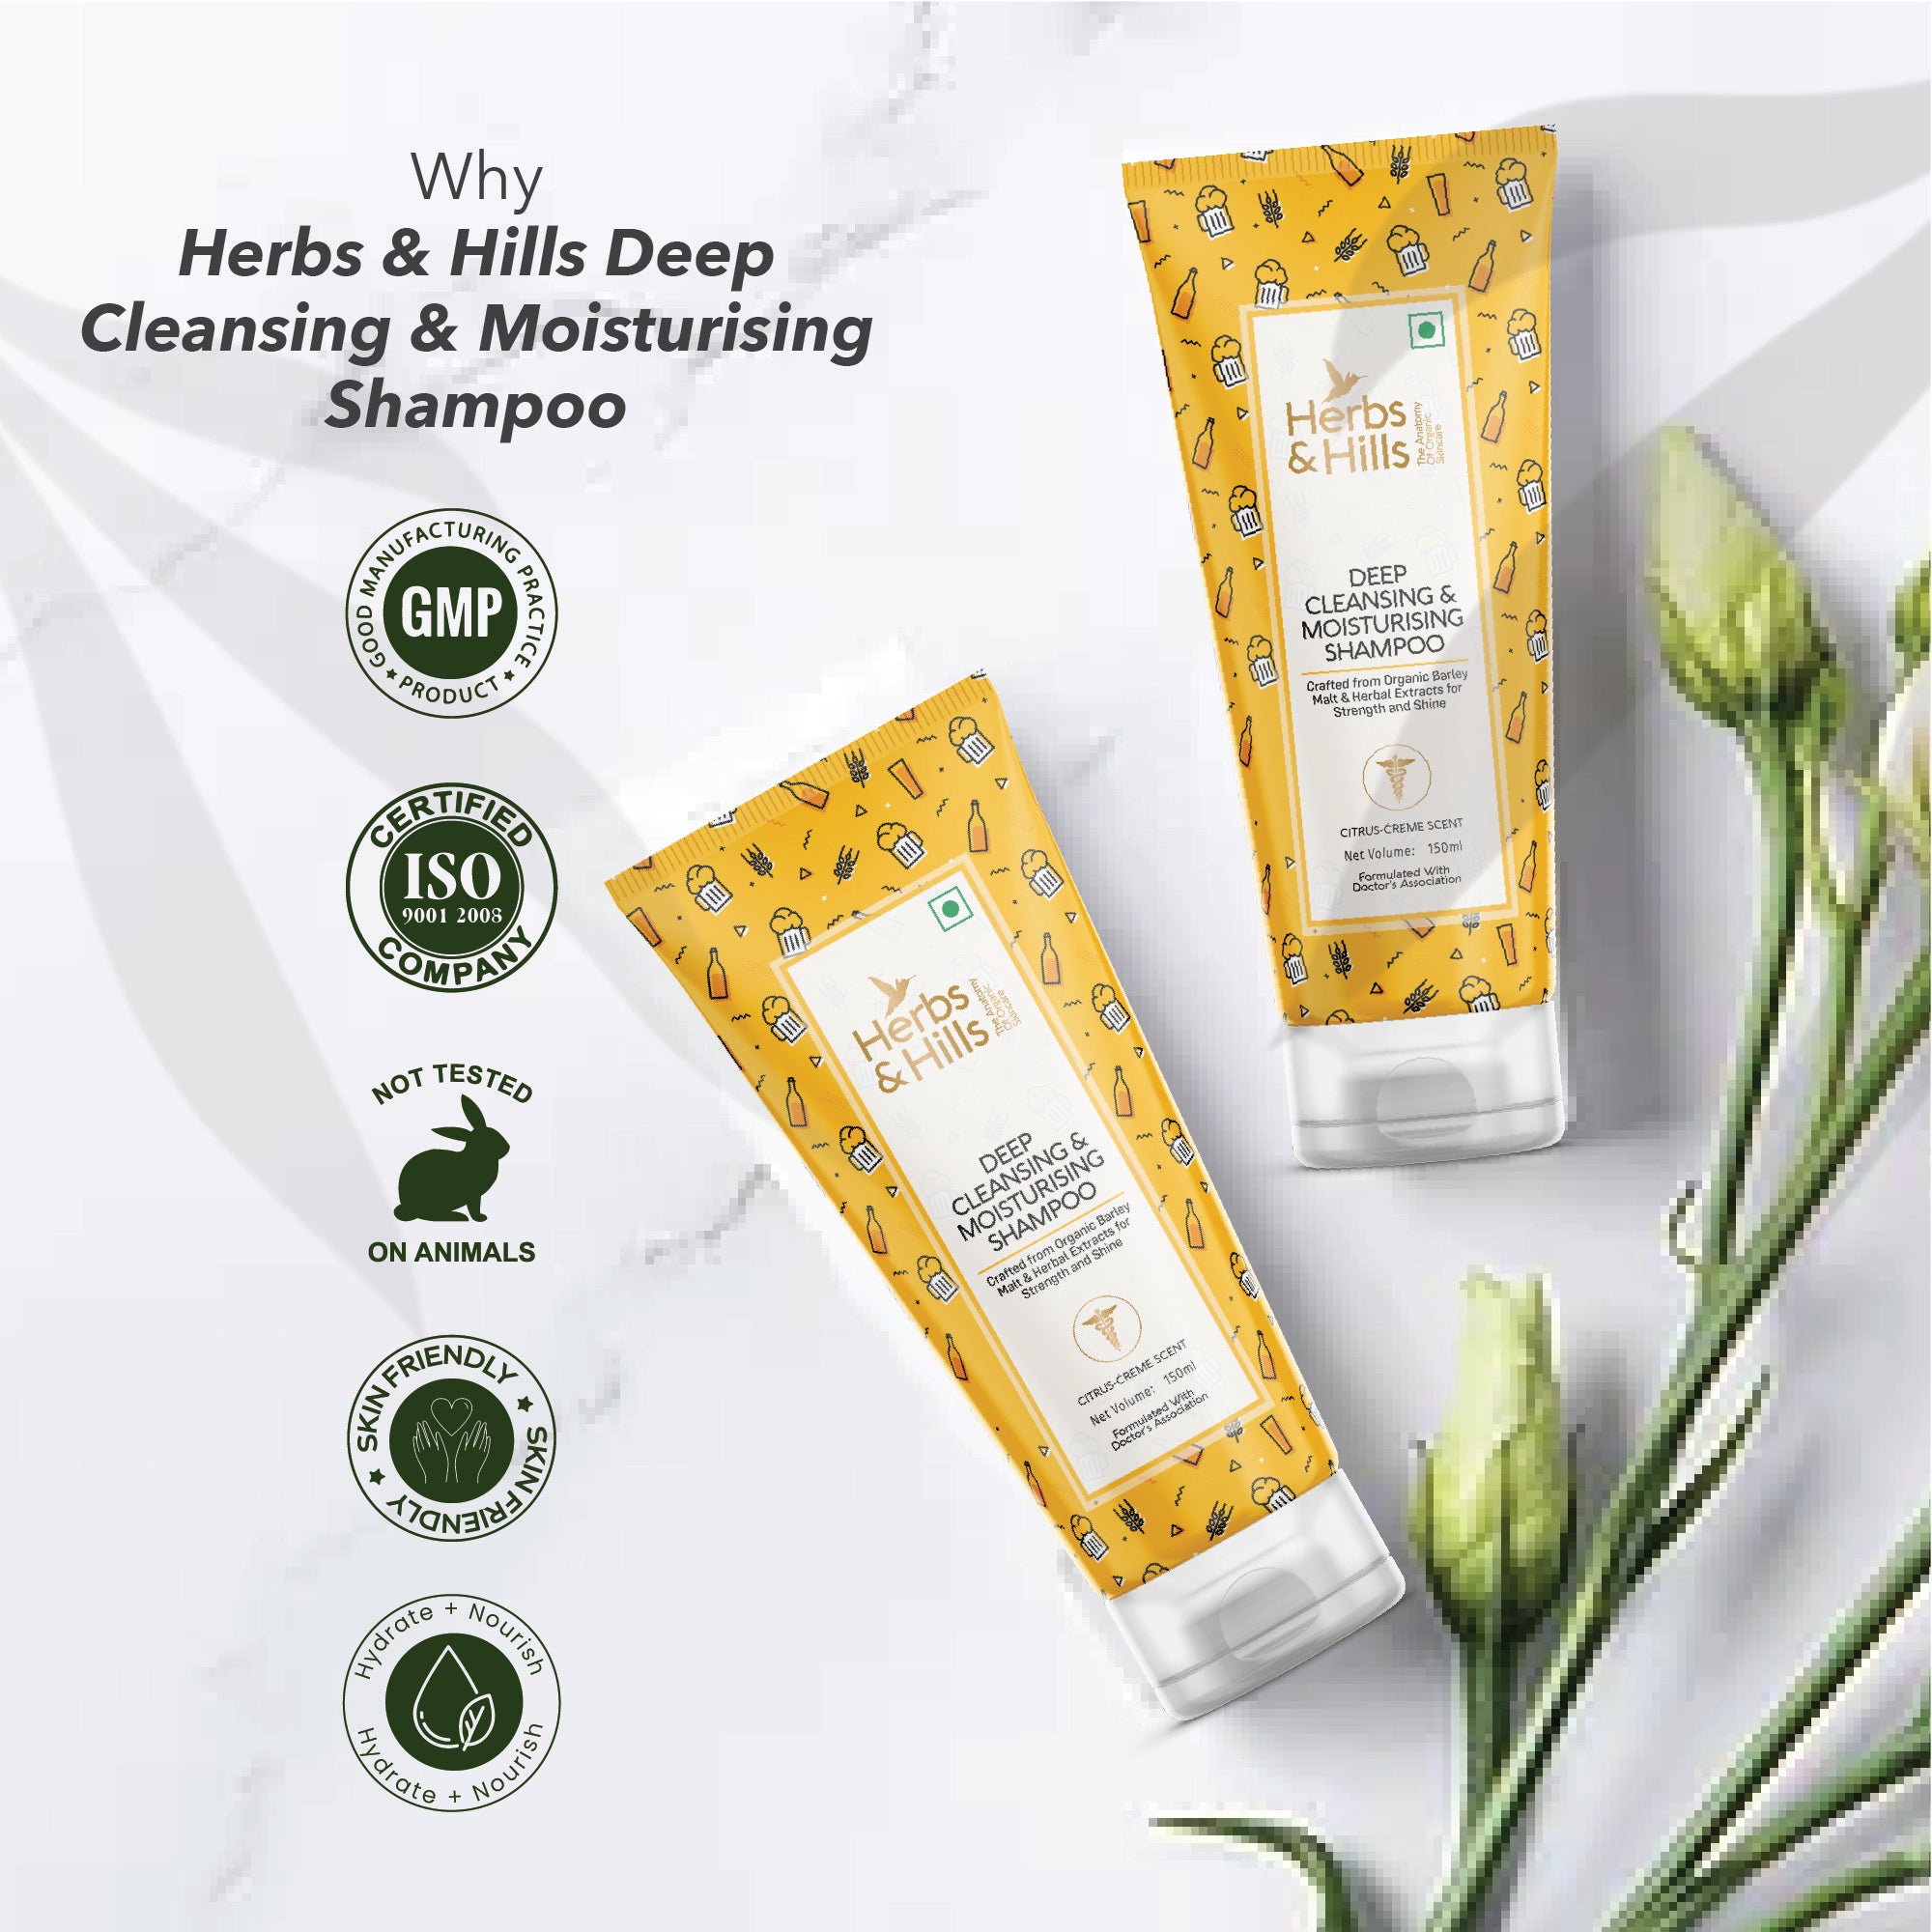 Deep Cleansing & Moisturising Shampoo